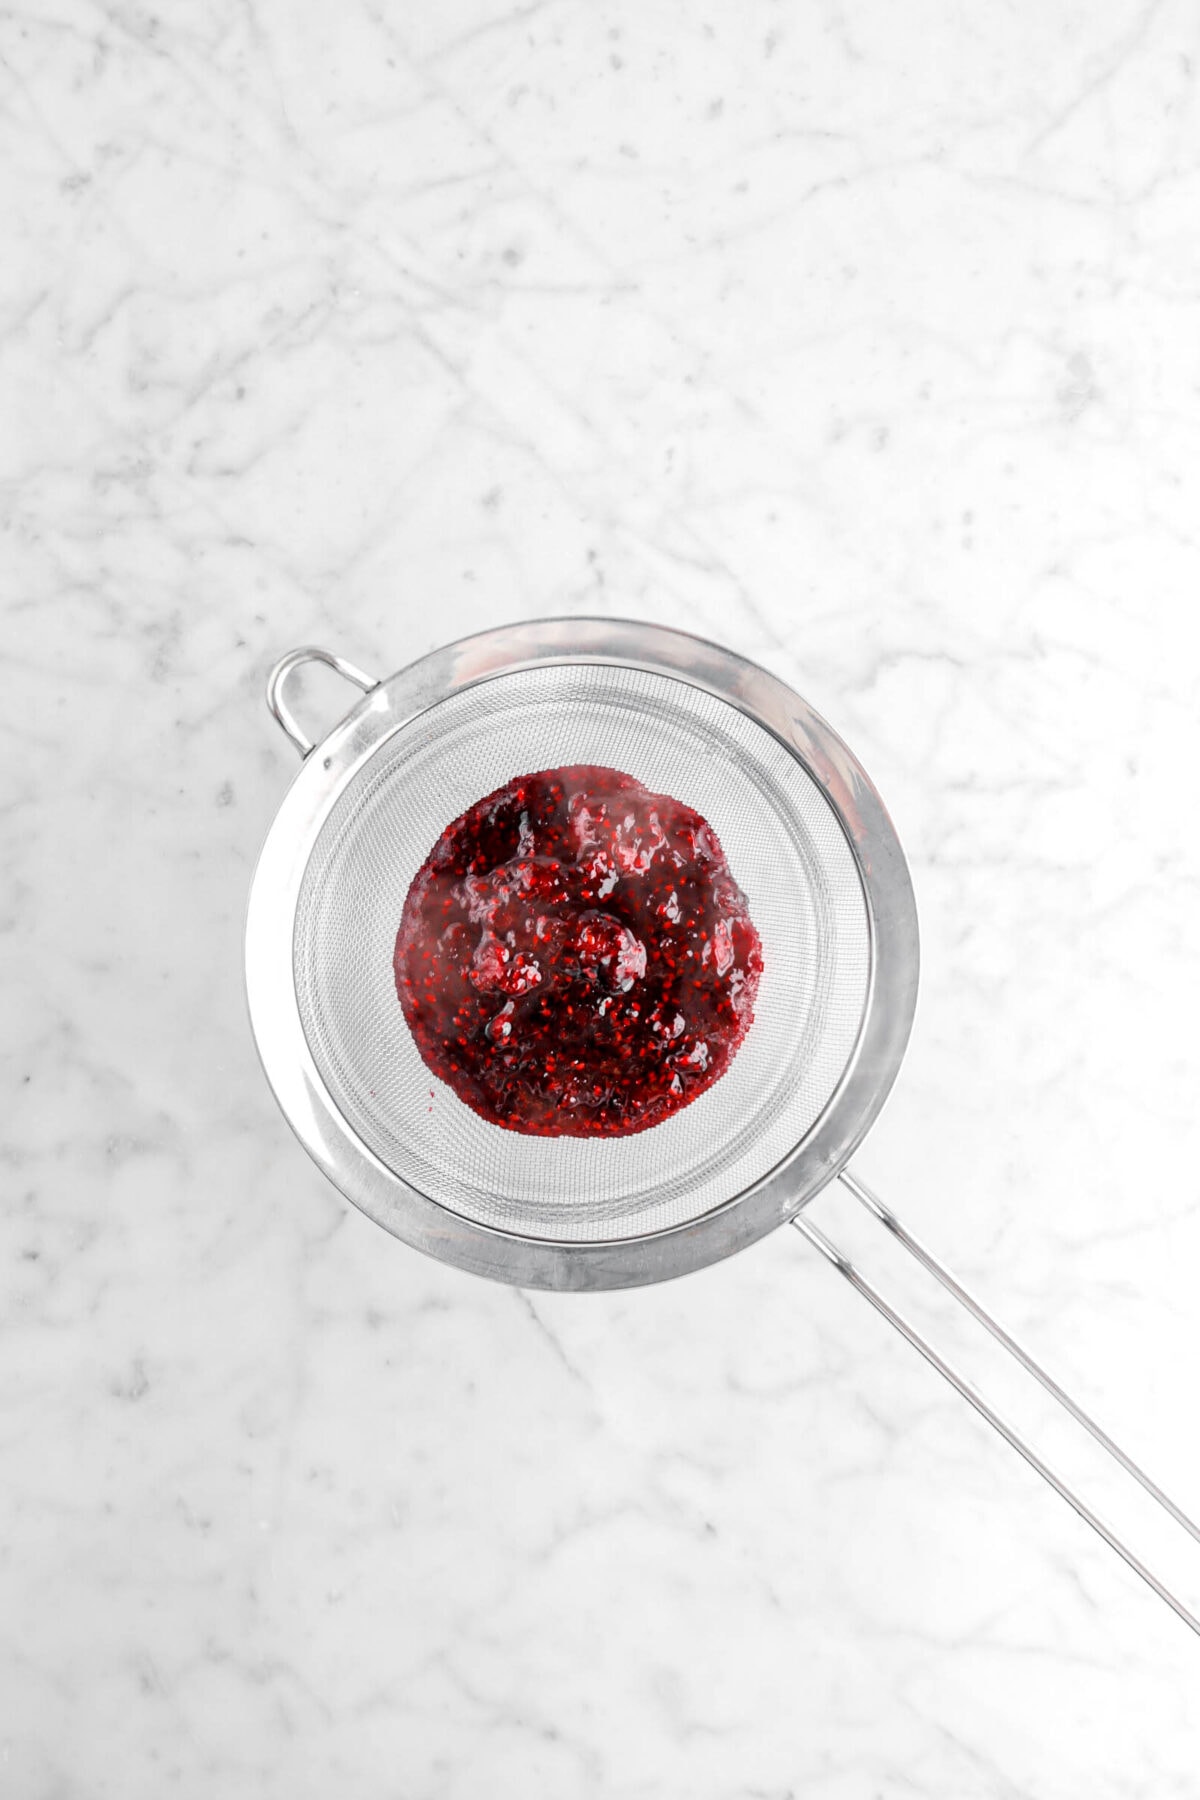 blackberry jam in sieve over glass bowl